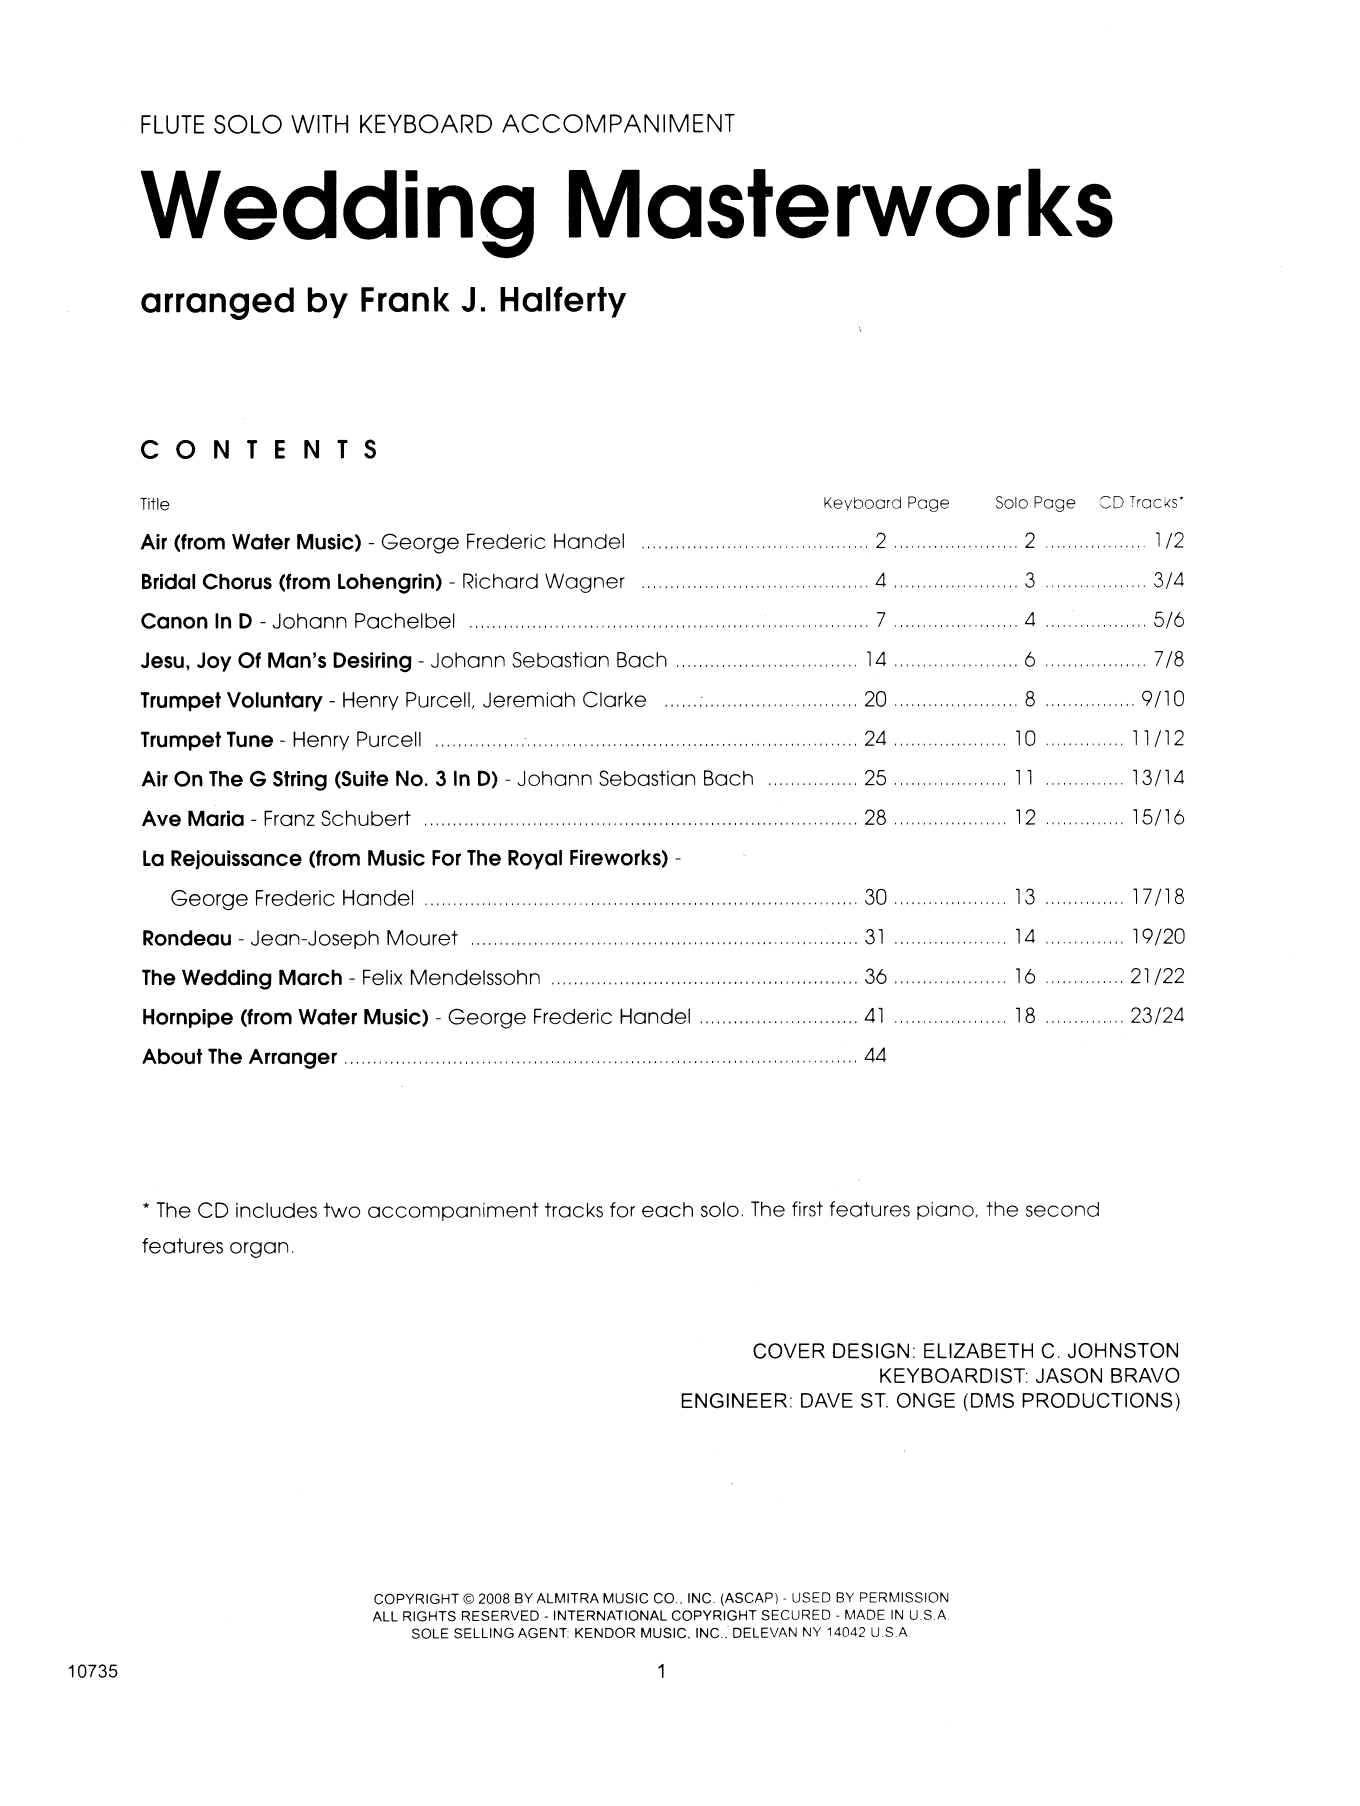 Download Frank J. Halferty Wedding Masterworks - Flute - Flute Sheet Music